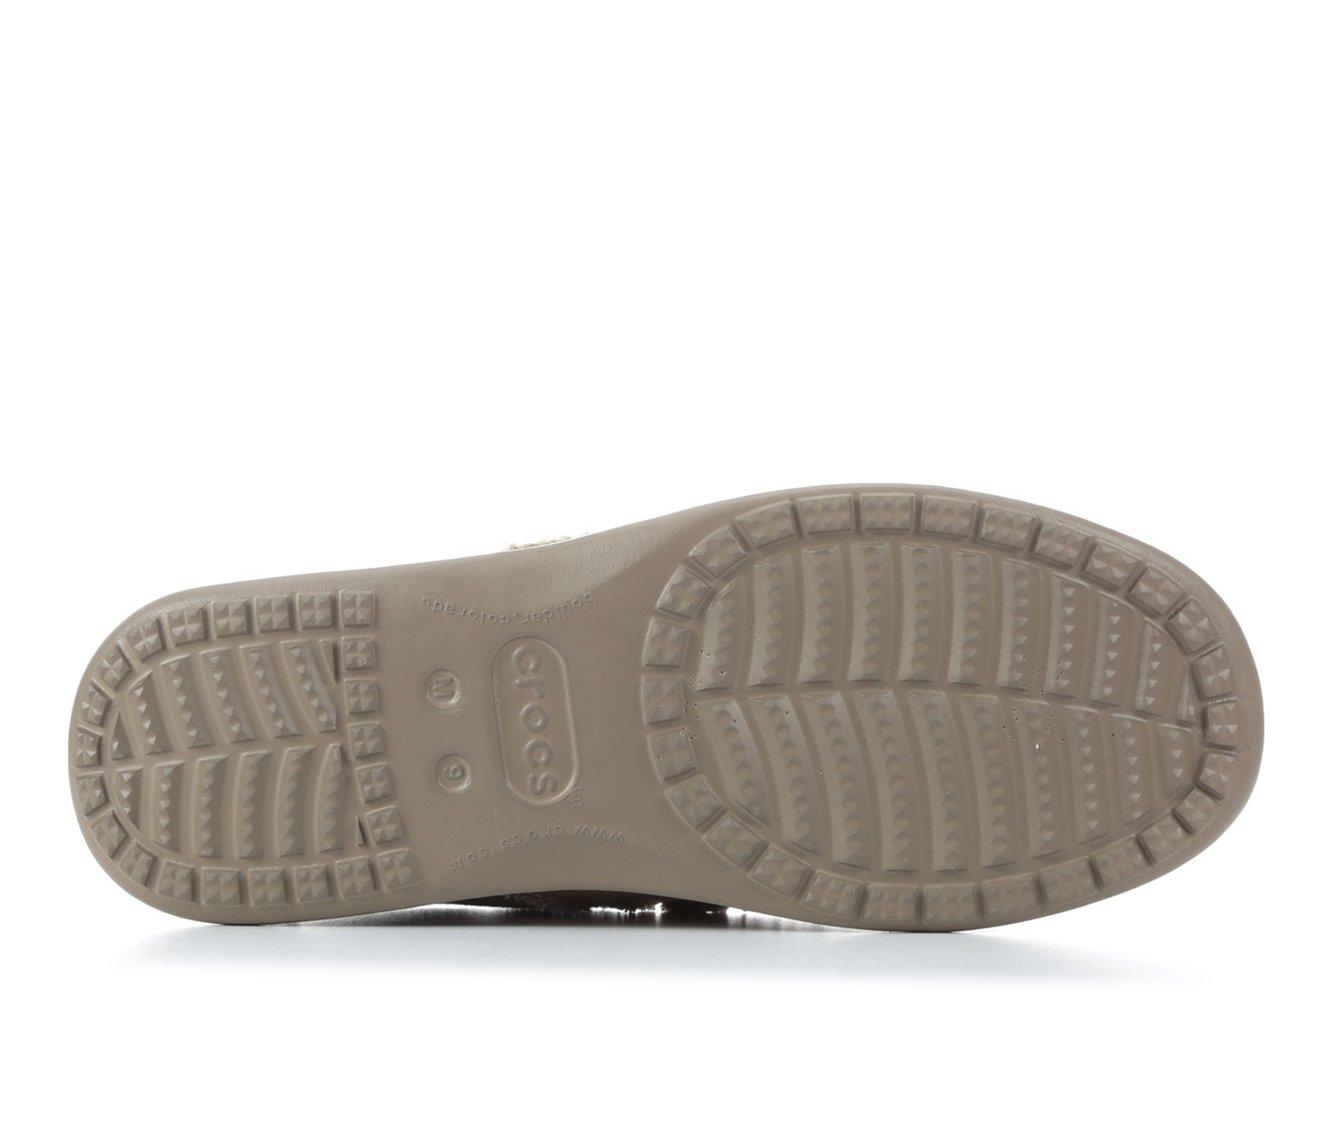 Men's Crocs Santa Cruz Casual Shoes | Shoe Carnival